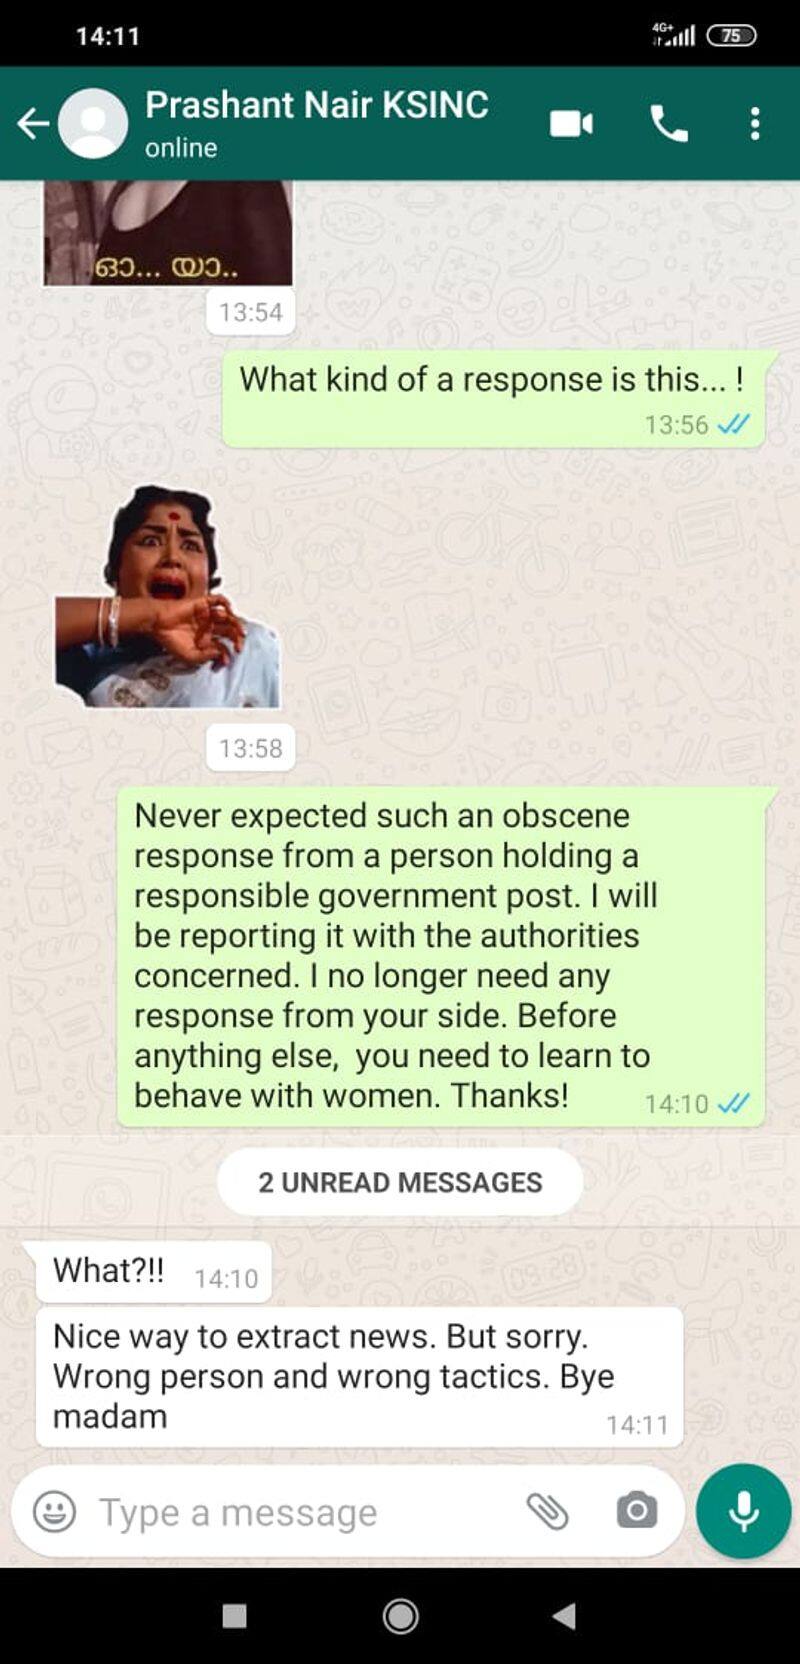 prasanth nair ias whatsapp chat with woman journalist send obscene stickers creates row